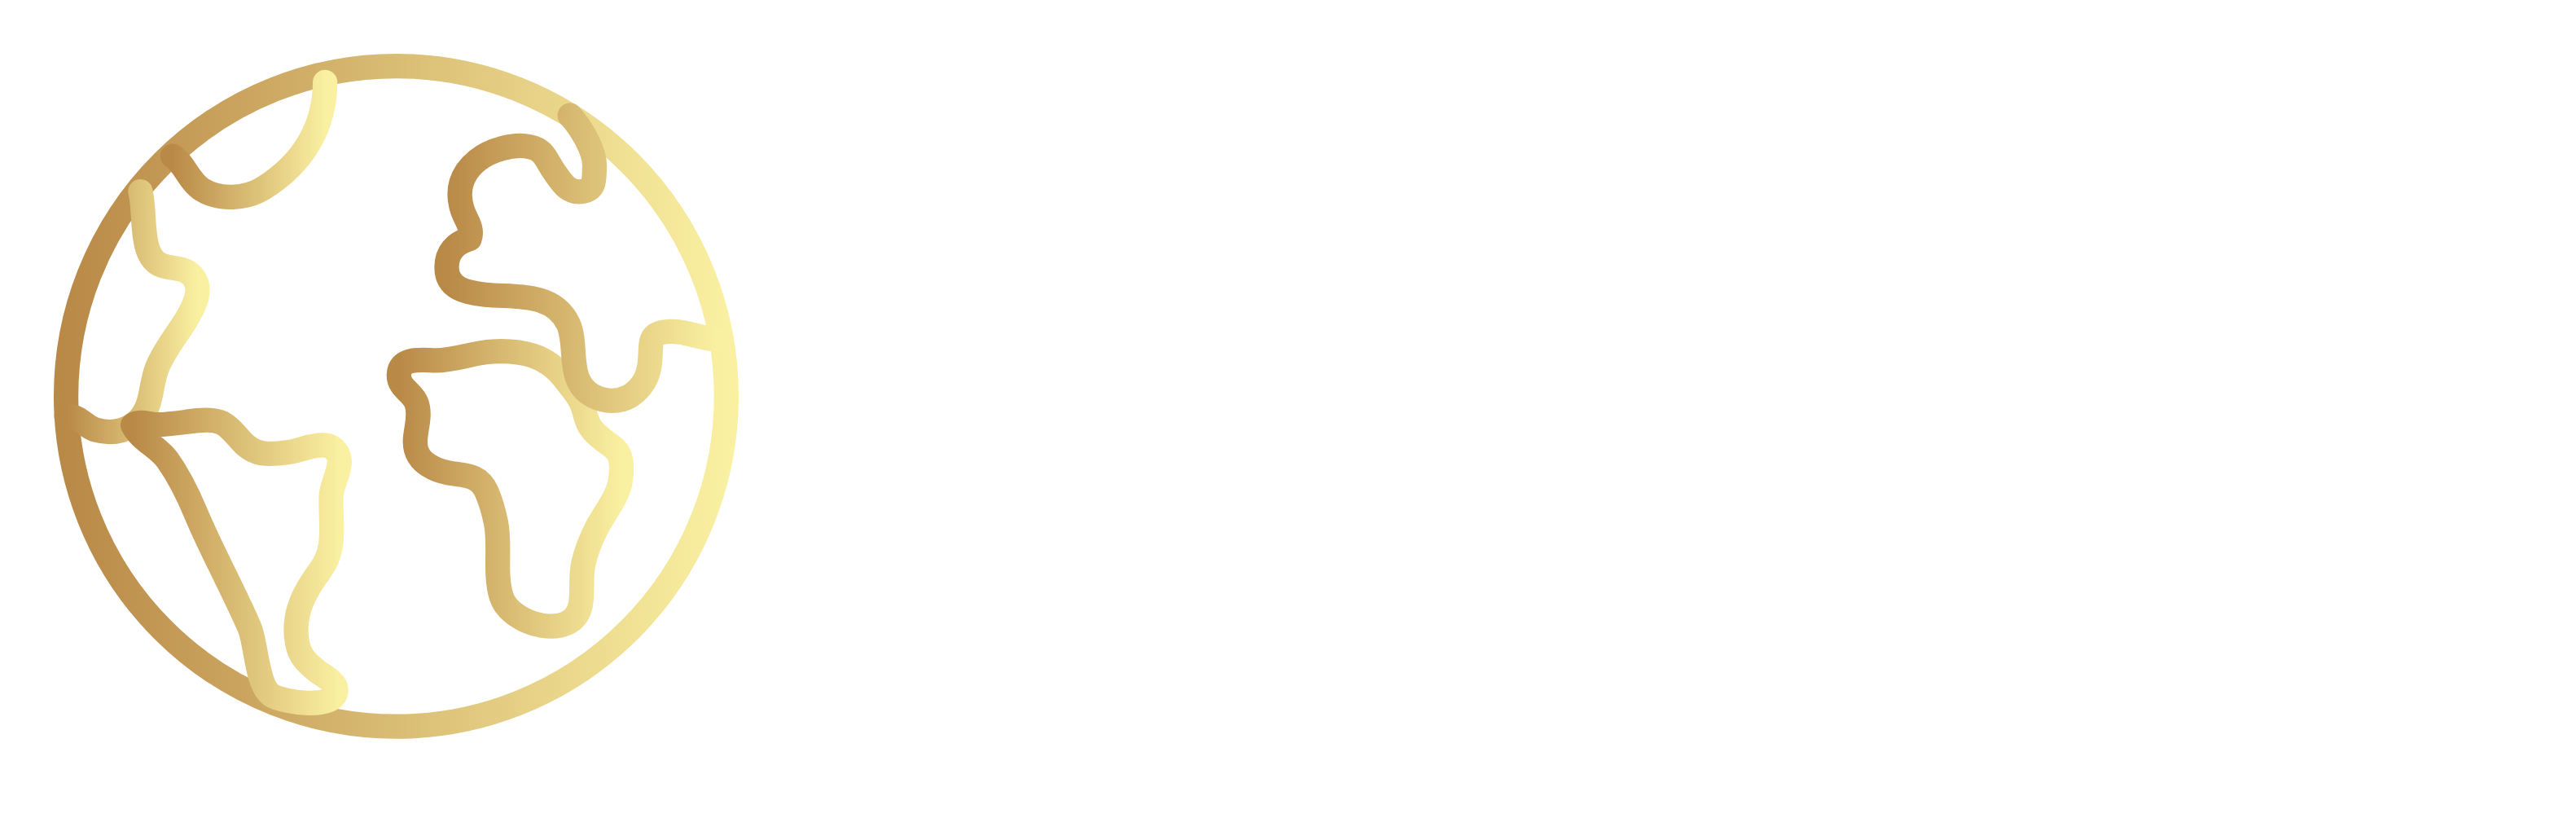 Fairway Sustainability Partners